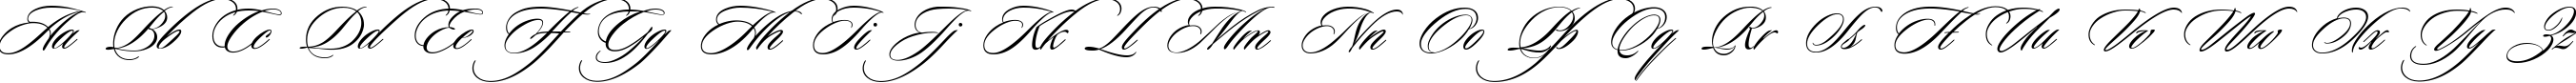 Пример написания английского алфавита шрифтом Ceremonious Three